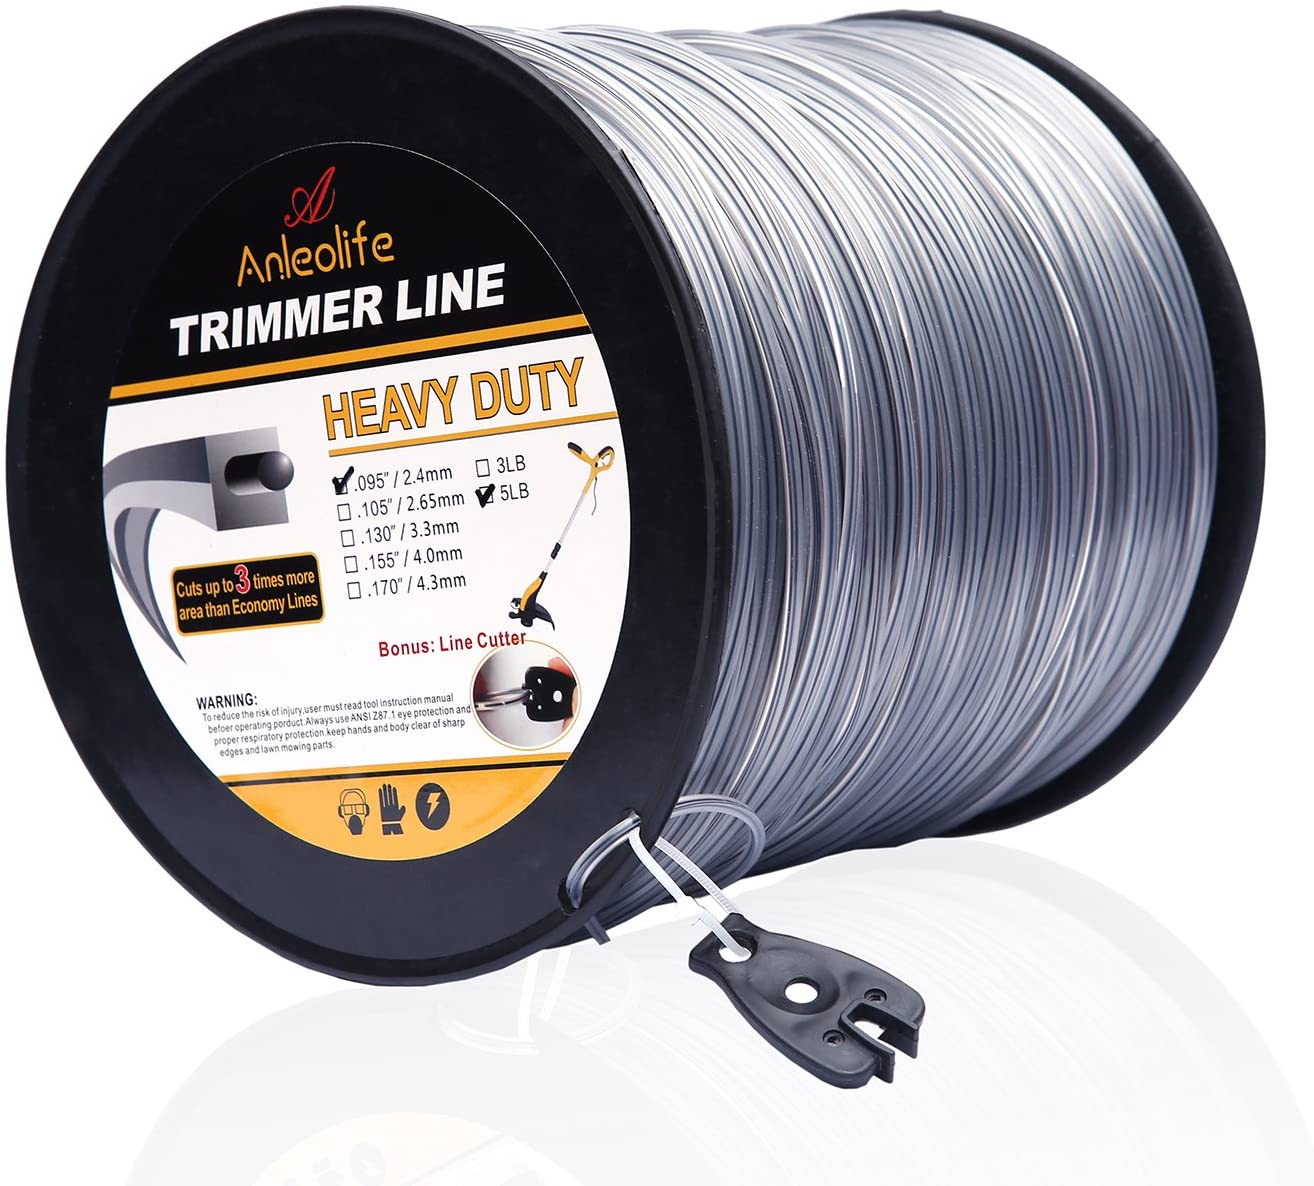 Anleolife Heavy Duty Square Trimmer Line 095" x 1280ft, 5lb